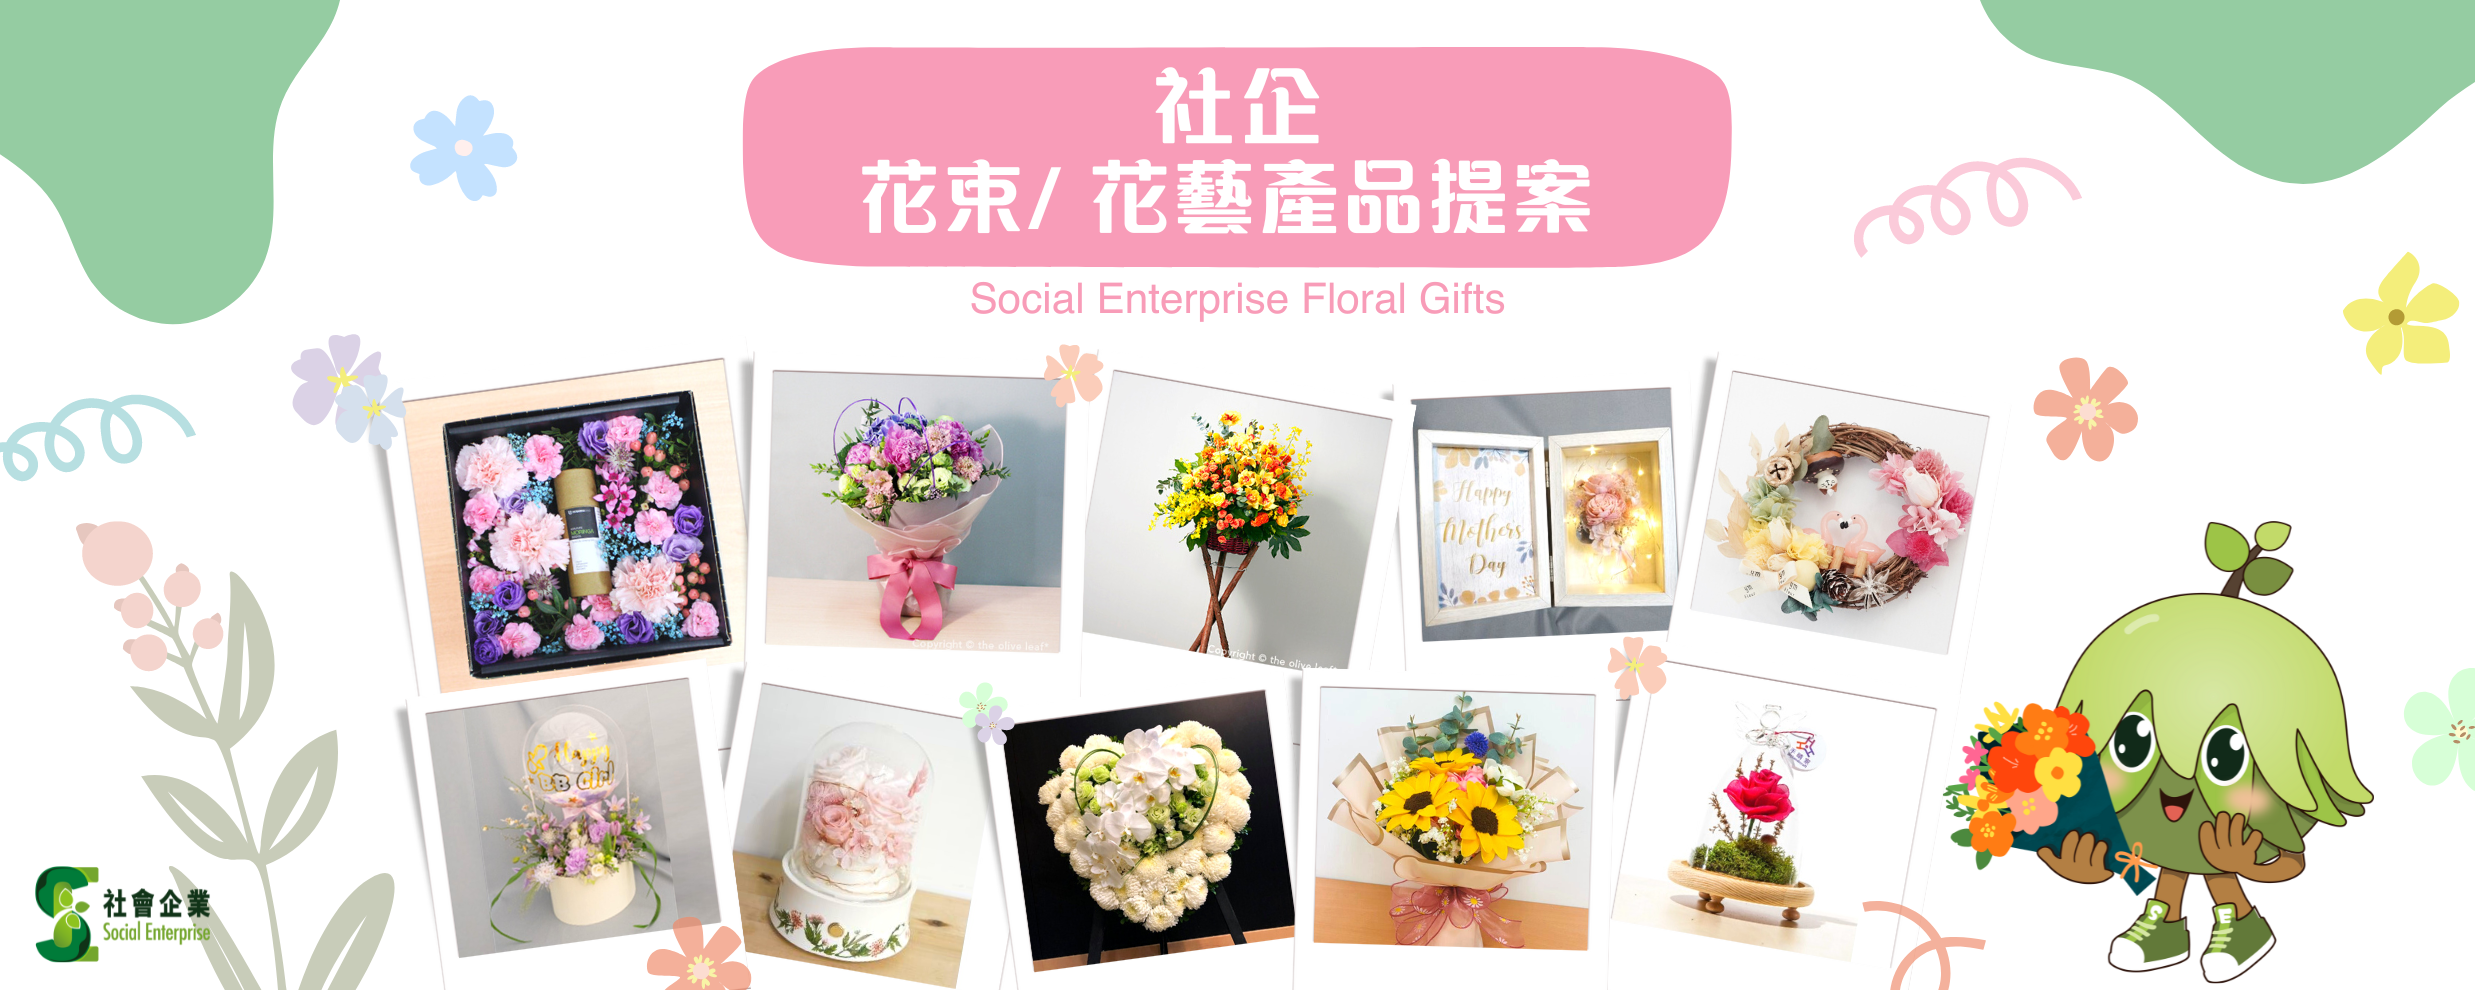 Social Enterprise Floral Gifts news